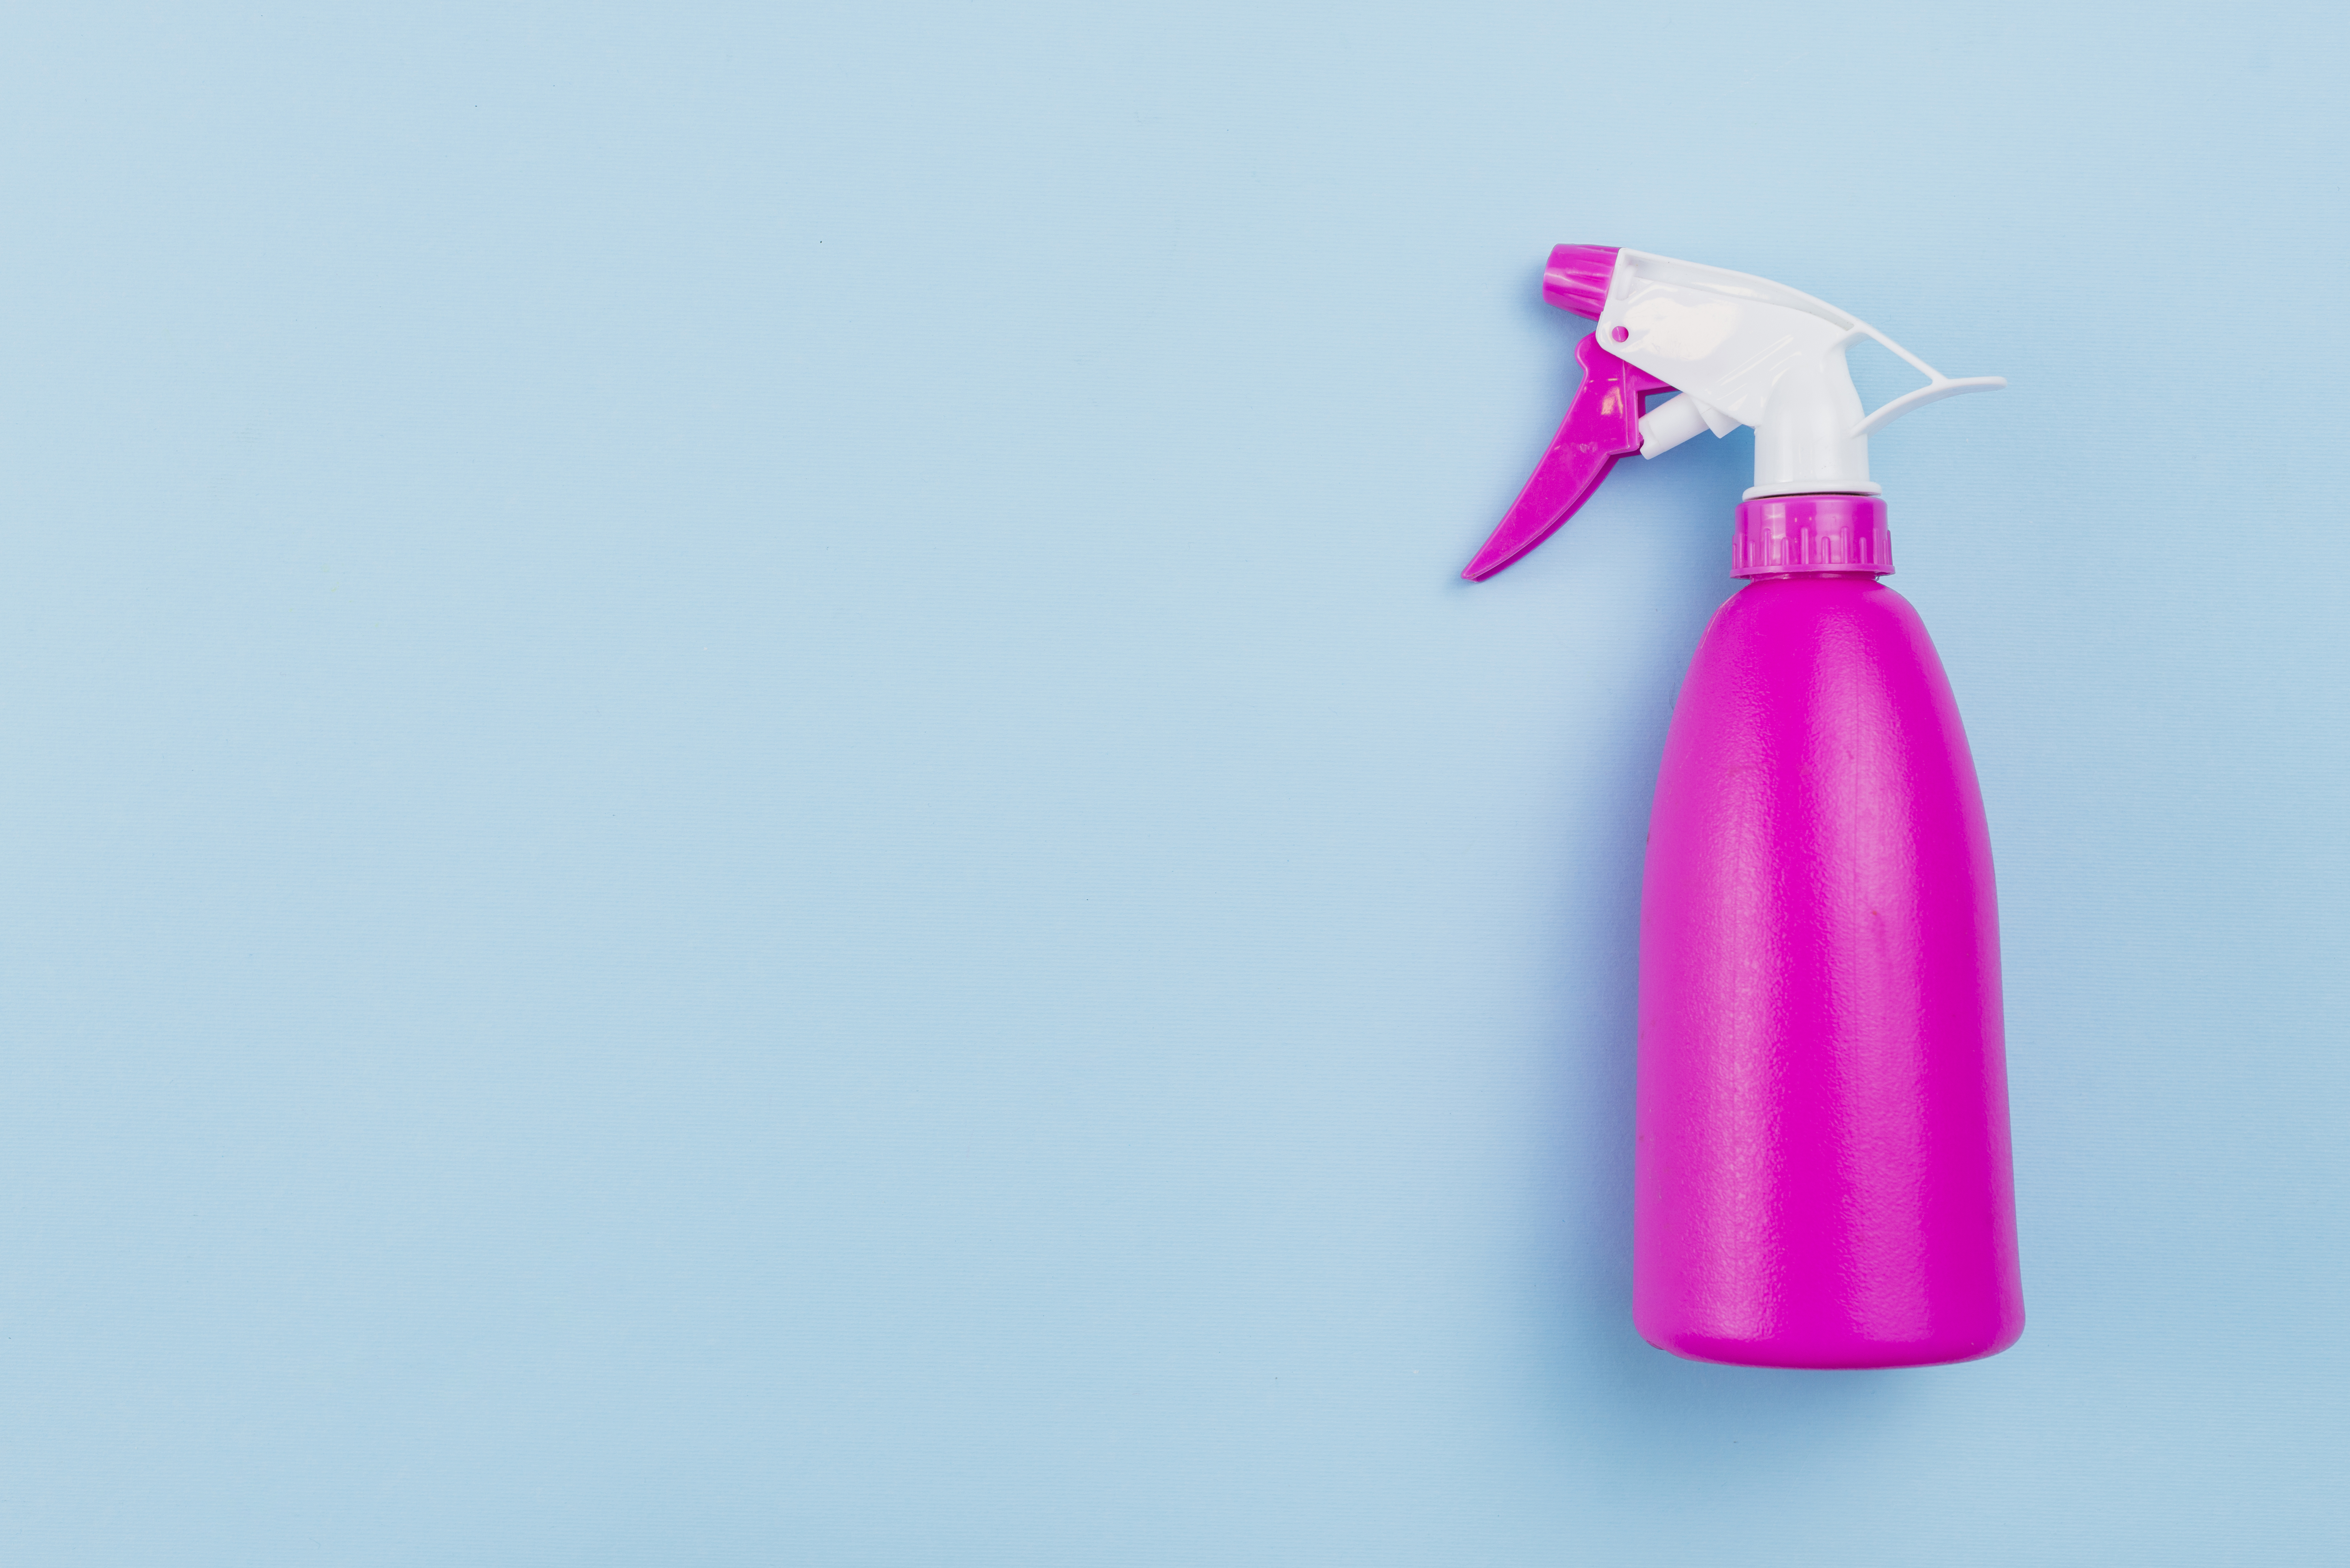 A pink spray bottle | Source: Freepik